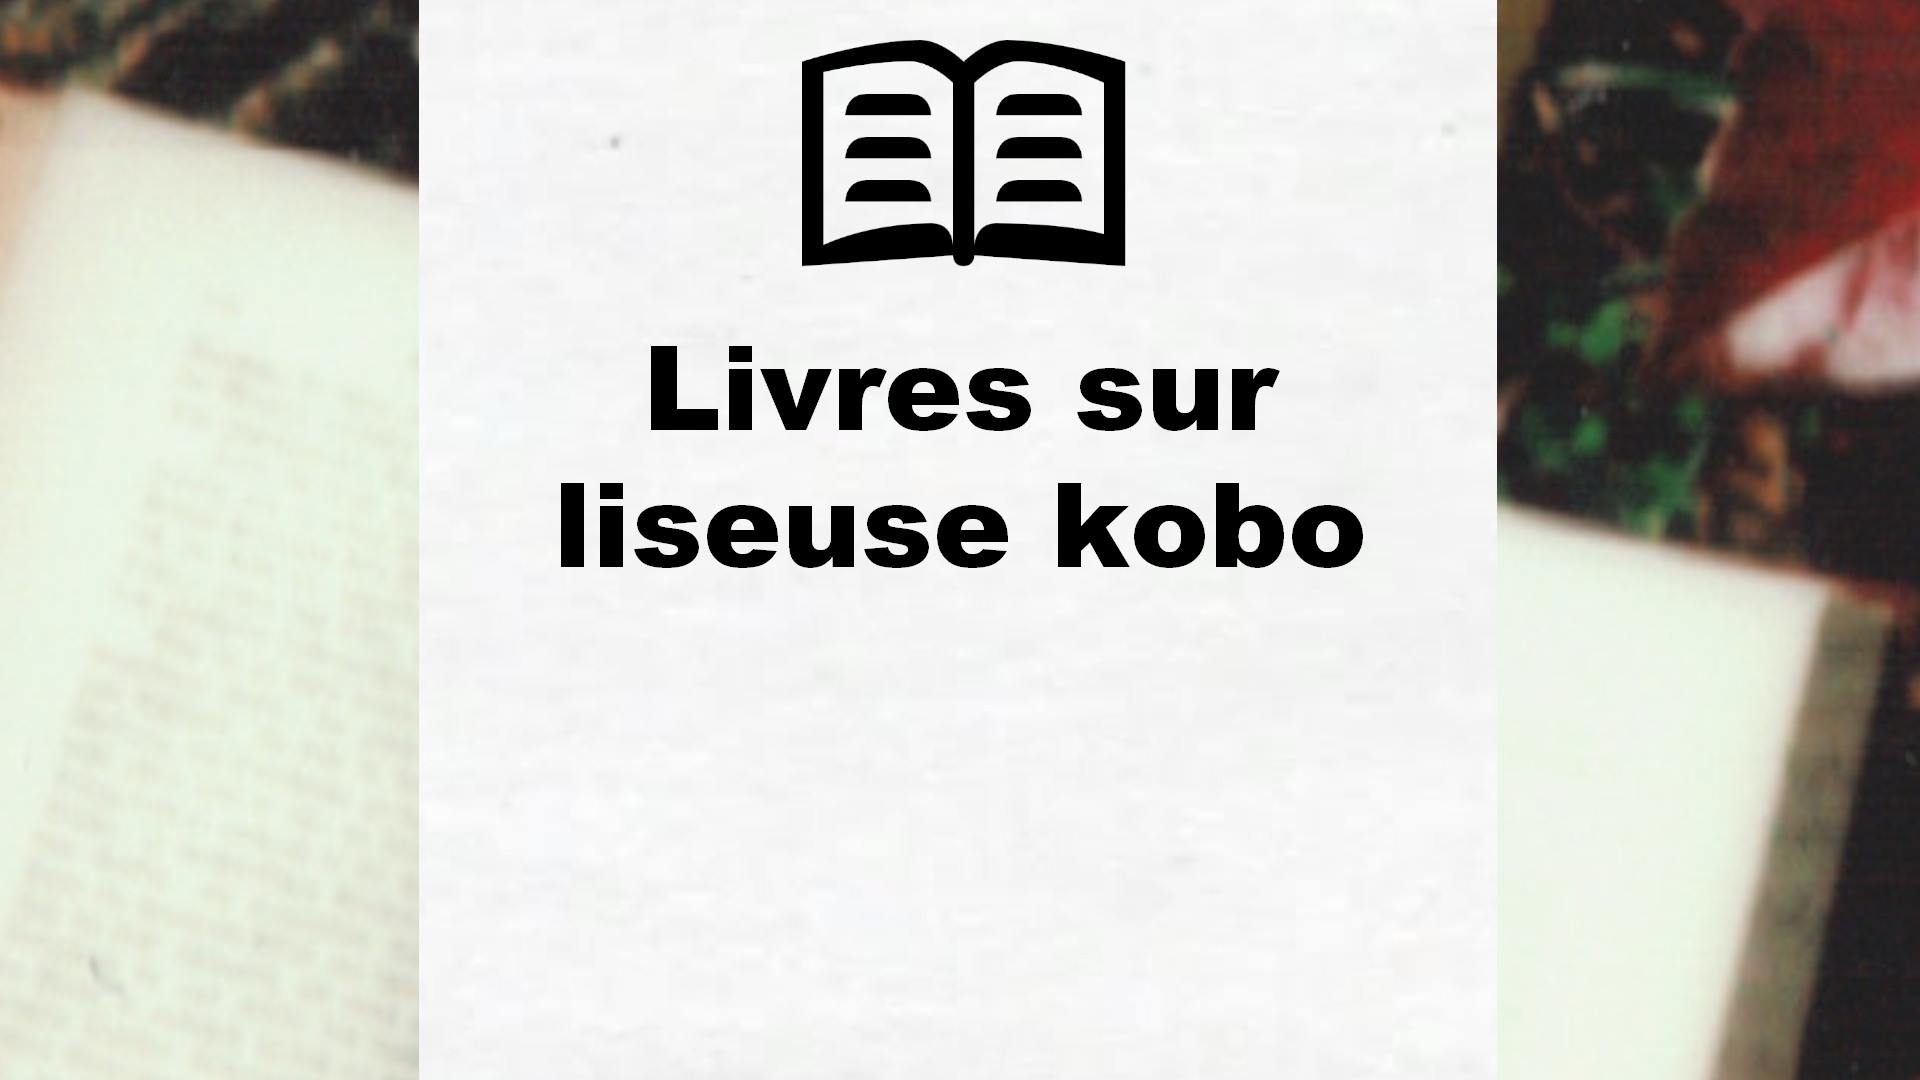 Livres sur liseuse kobo